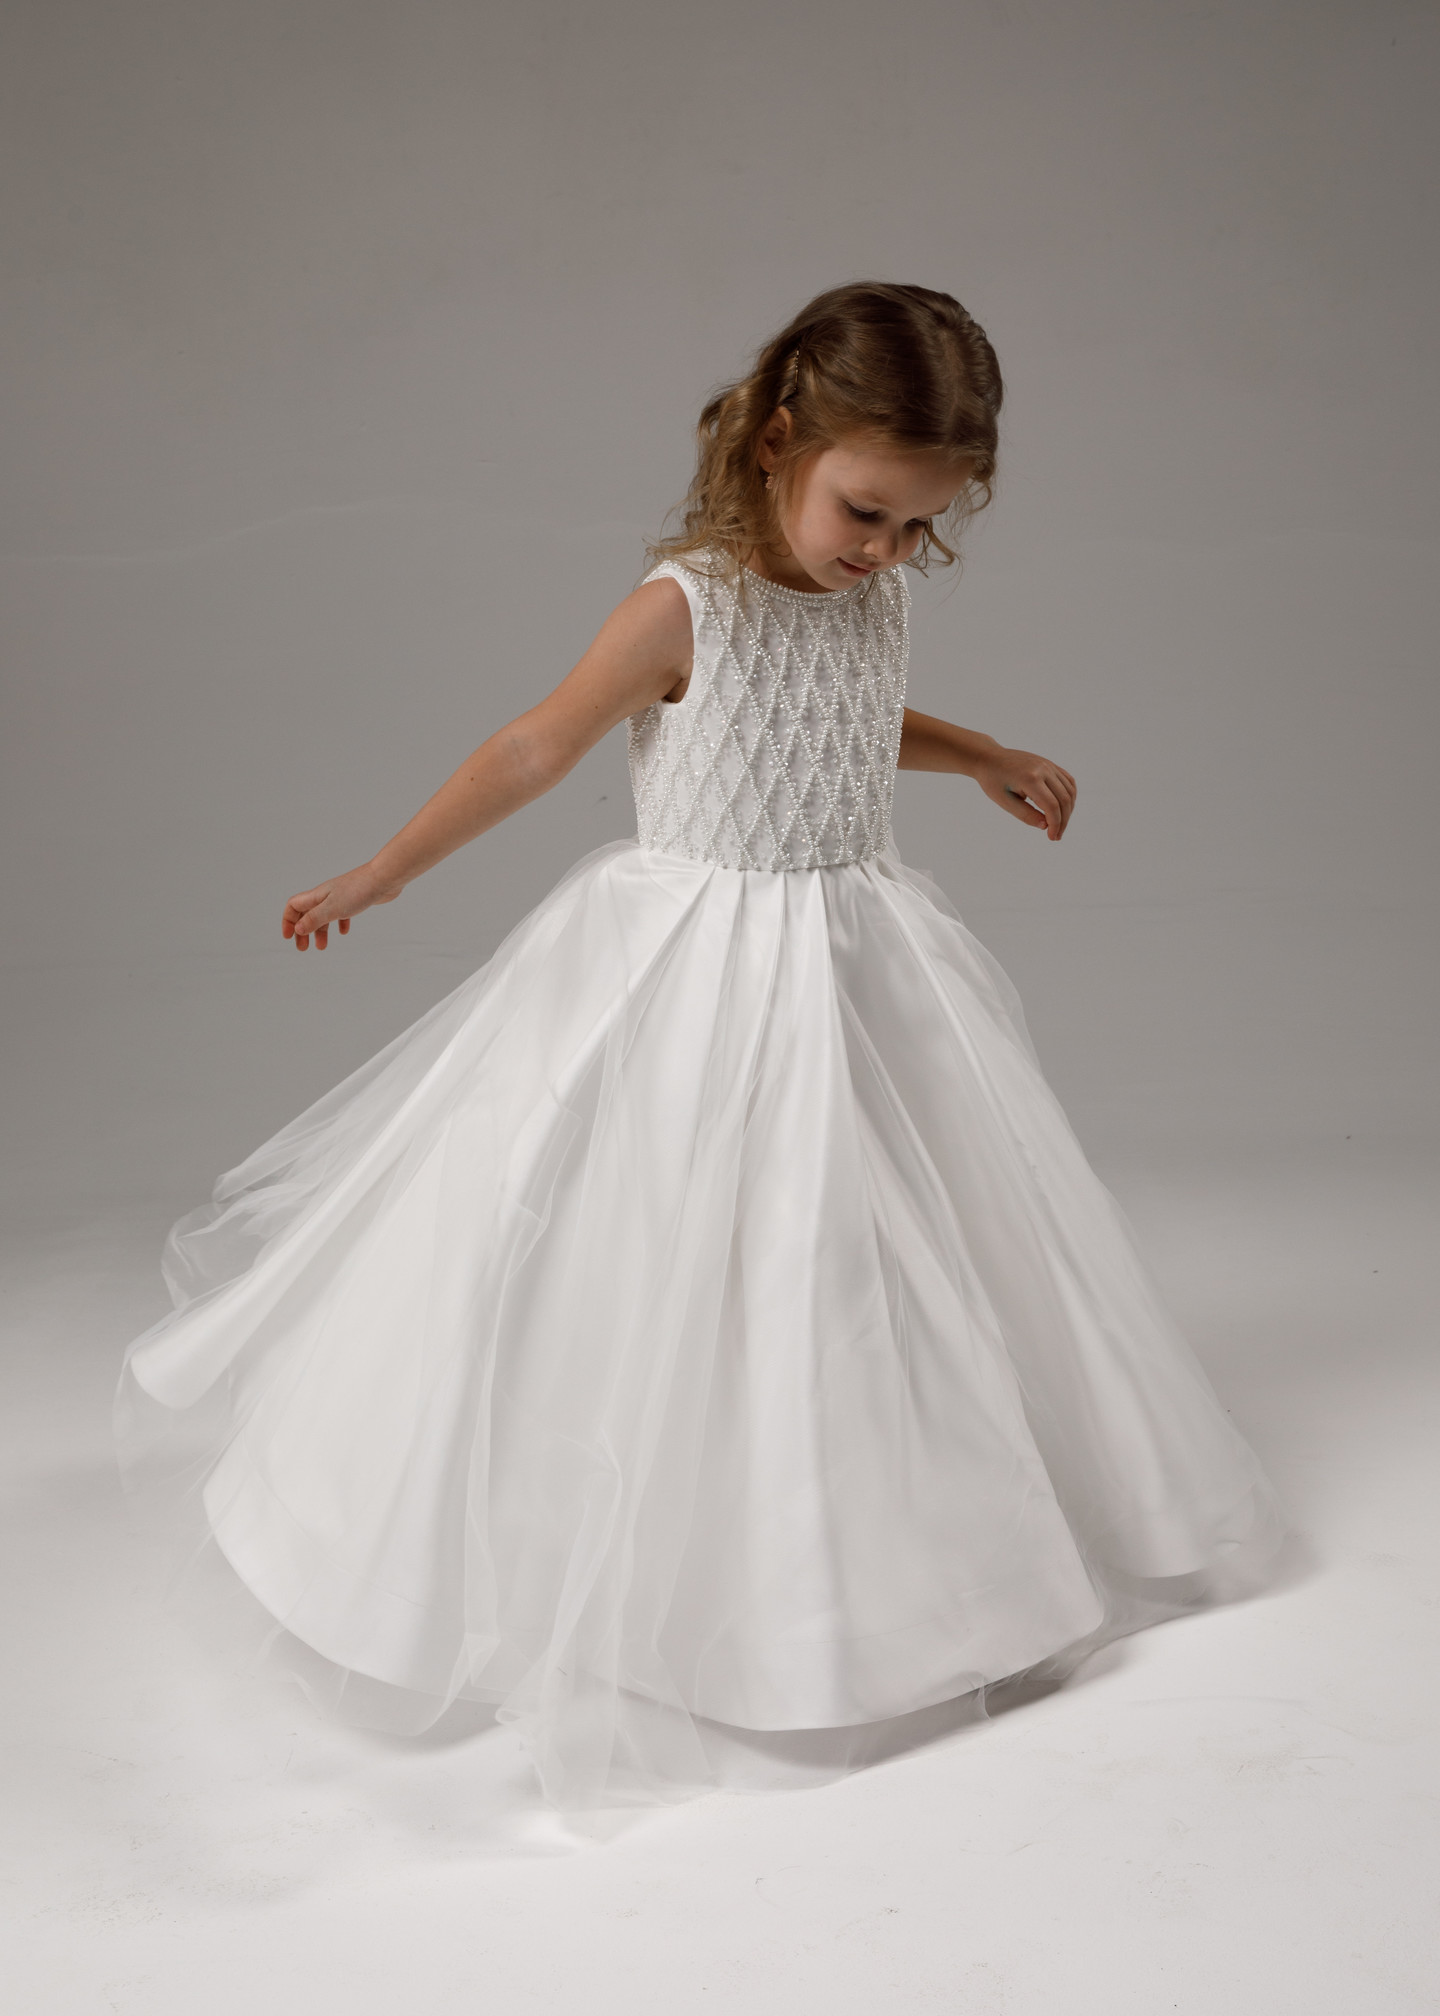 Beaded flower girl dress, 2021, couture, child dress, child, off-white, satin, embroidery, flower girl